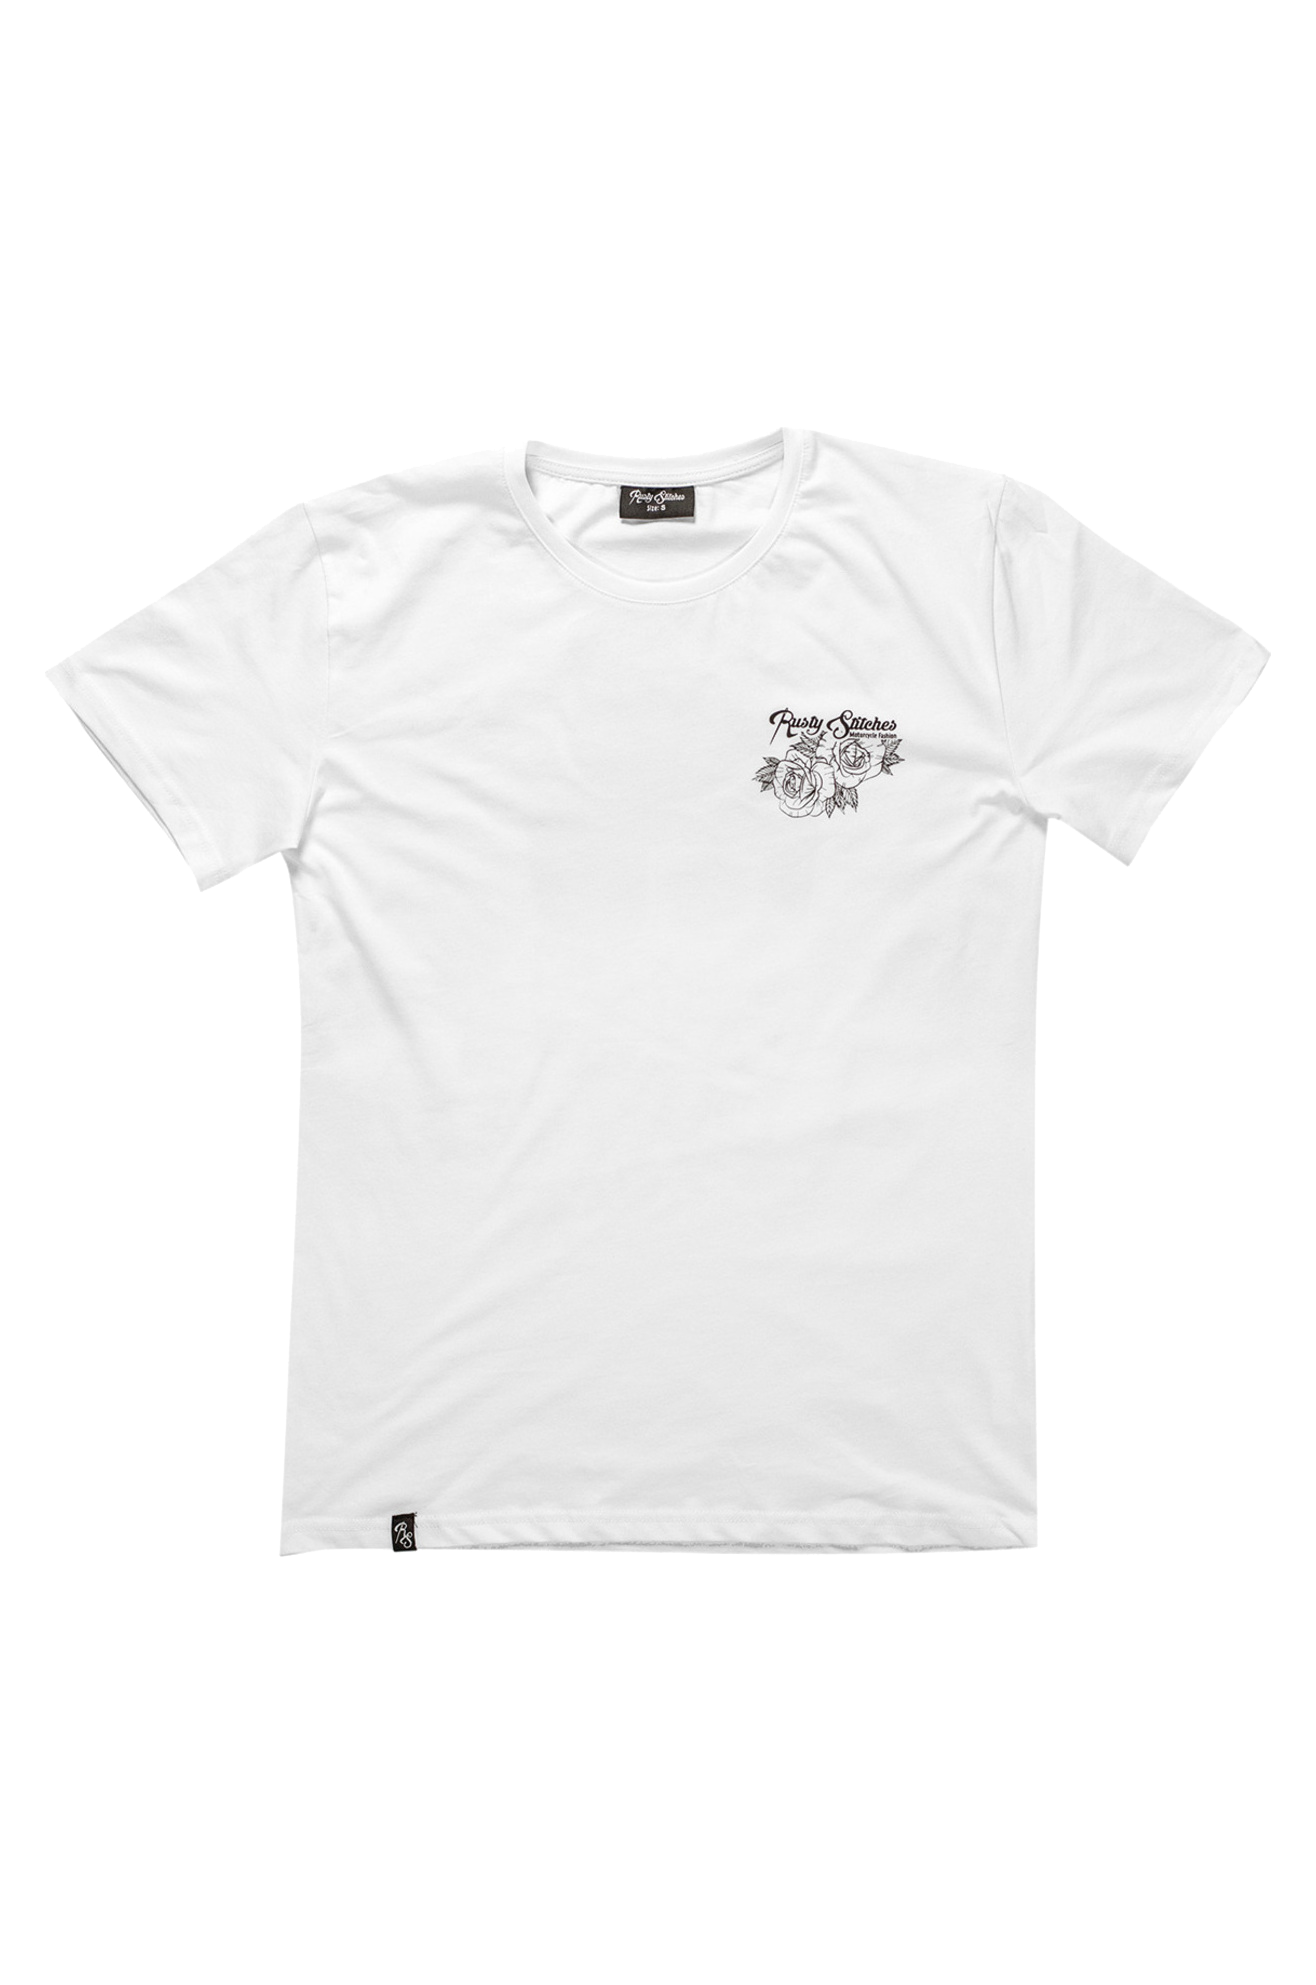 Rusty Stitches Camiseta  #114 Blanca (Para Siempre)